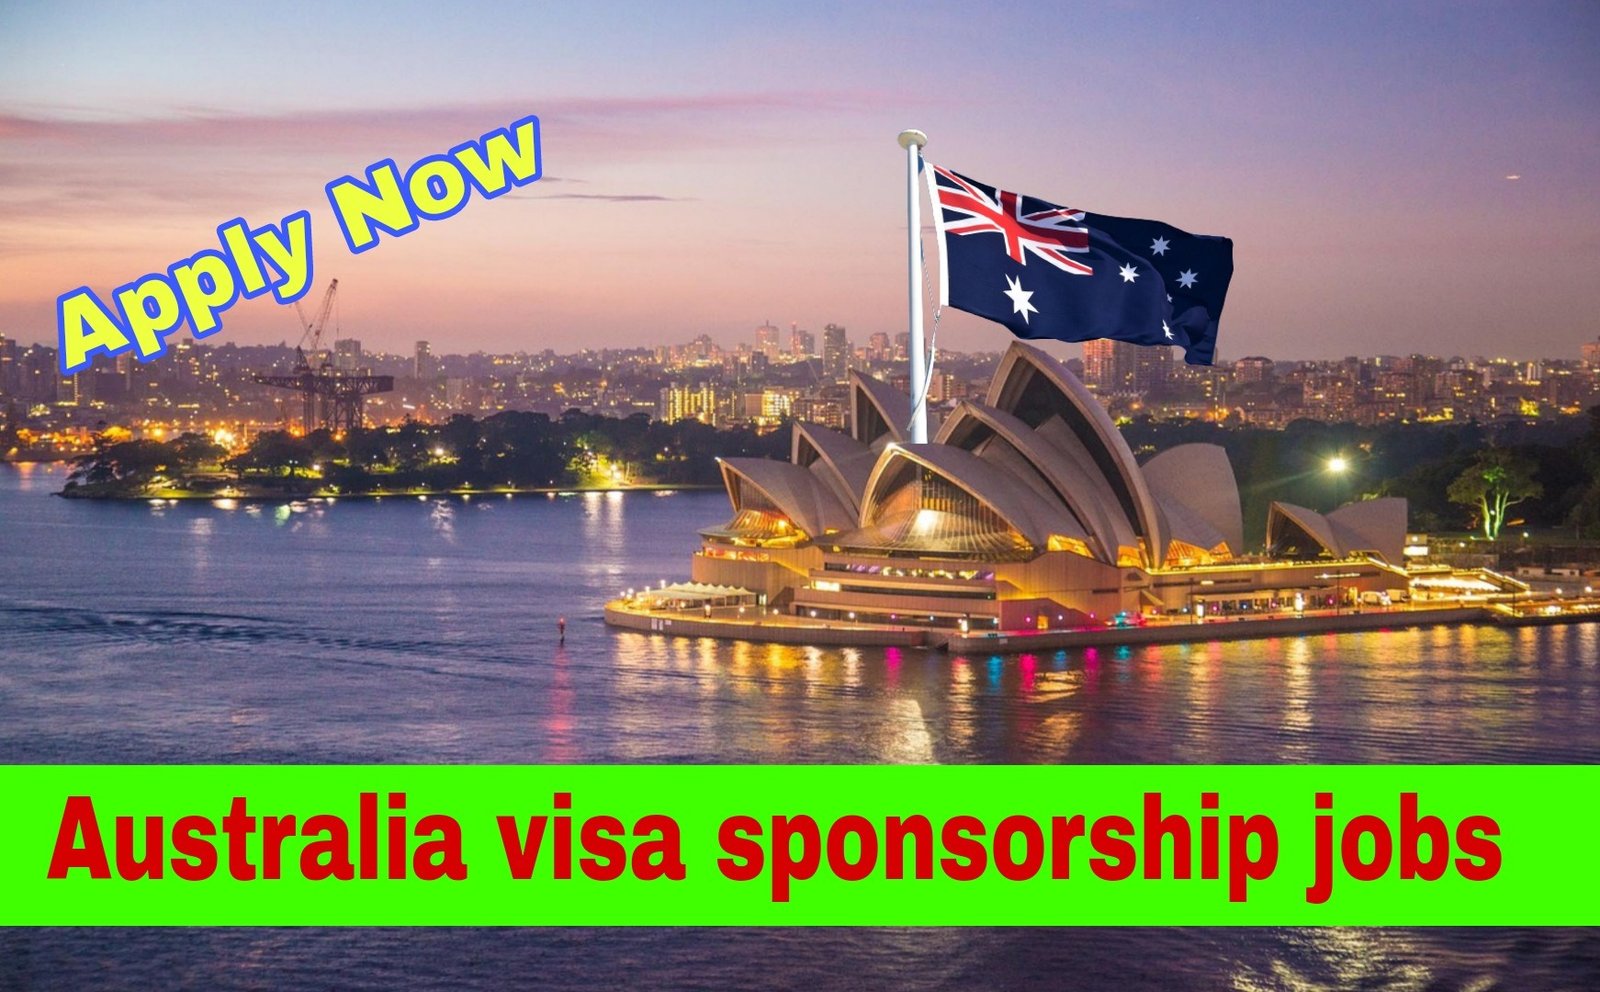 Occupational Therapist – Australia Visa sponsorship available